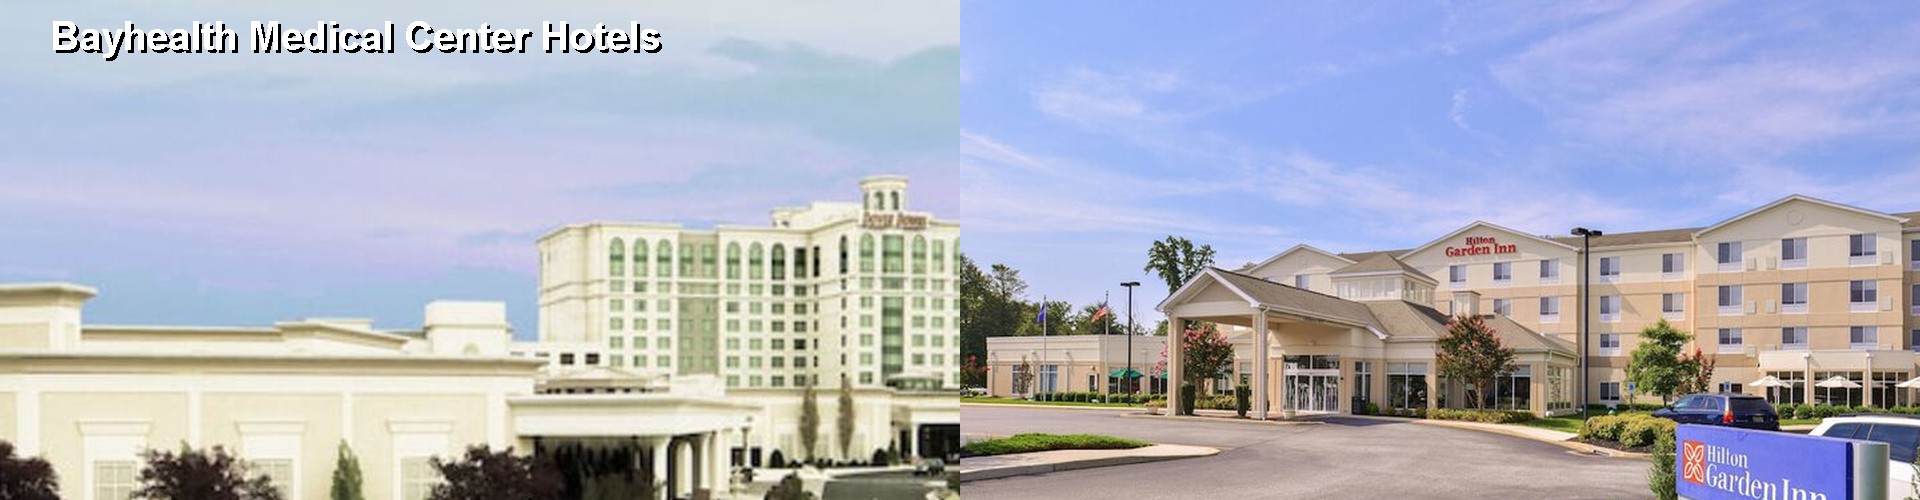 5 Best Hotels near Bayhealth Medical Center